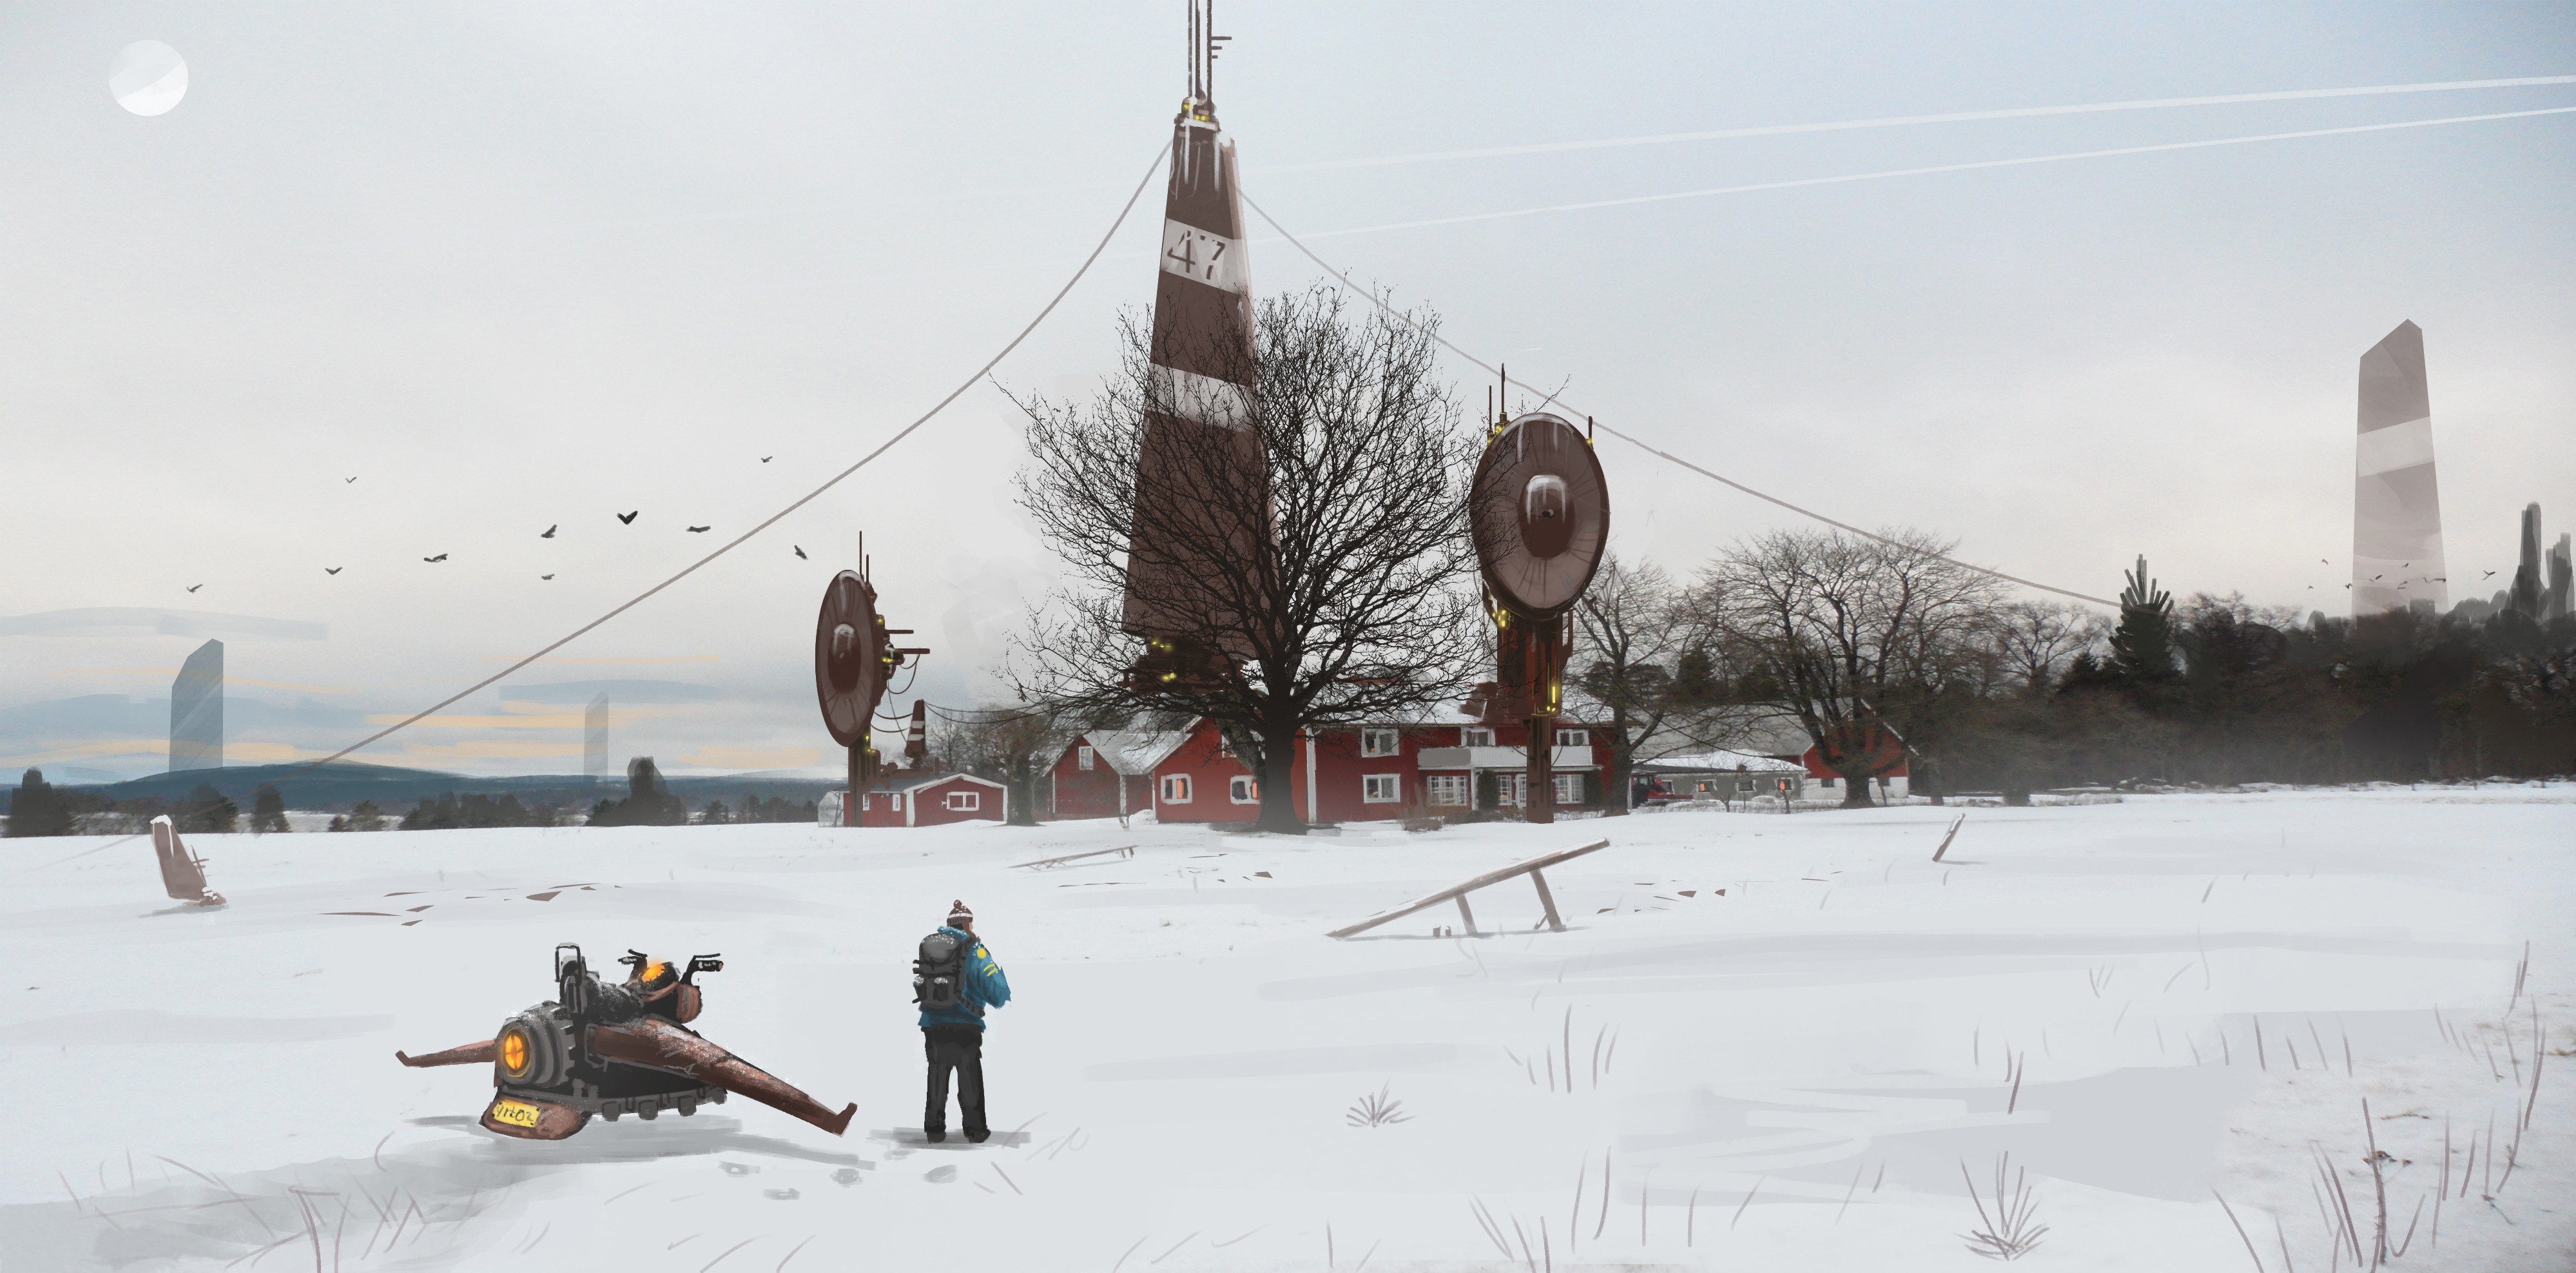 Artwork Futuristic Digital Art Snow Dead Trees Building Alone Field Trees Sweden Simon Stalenhag 3997x1975